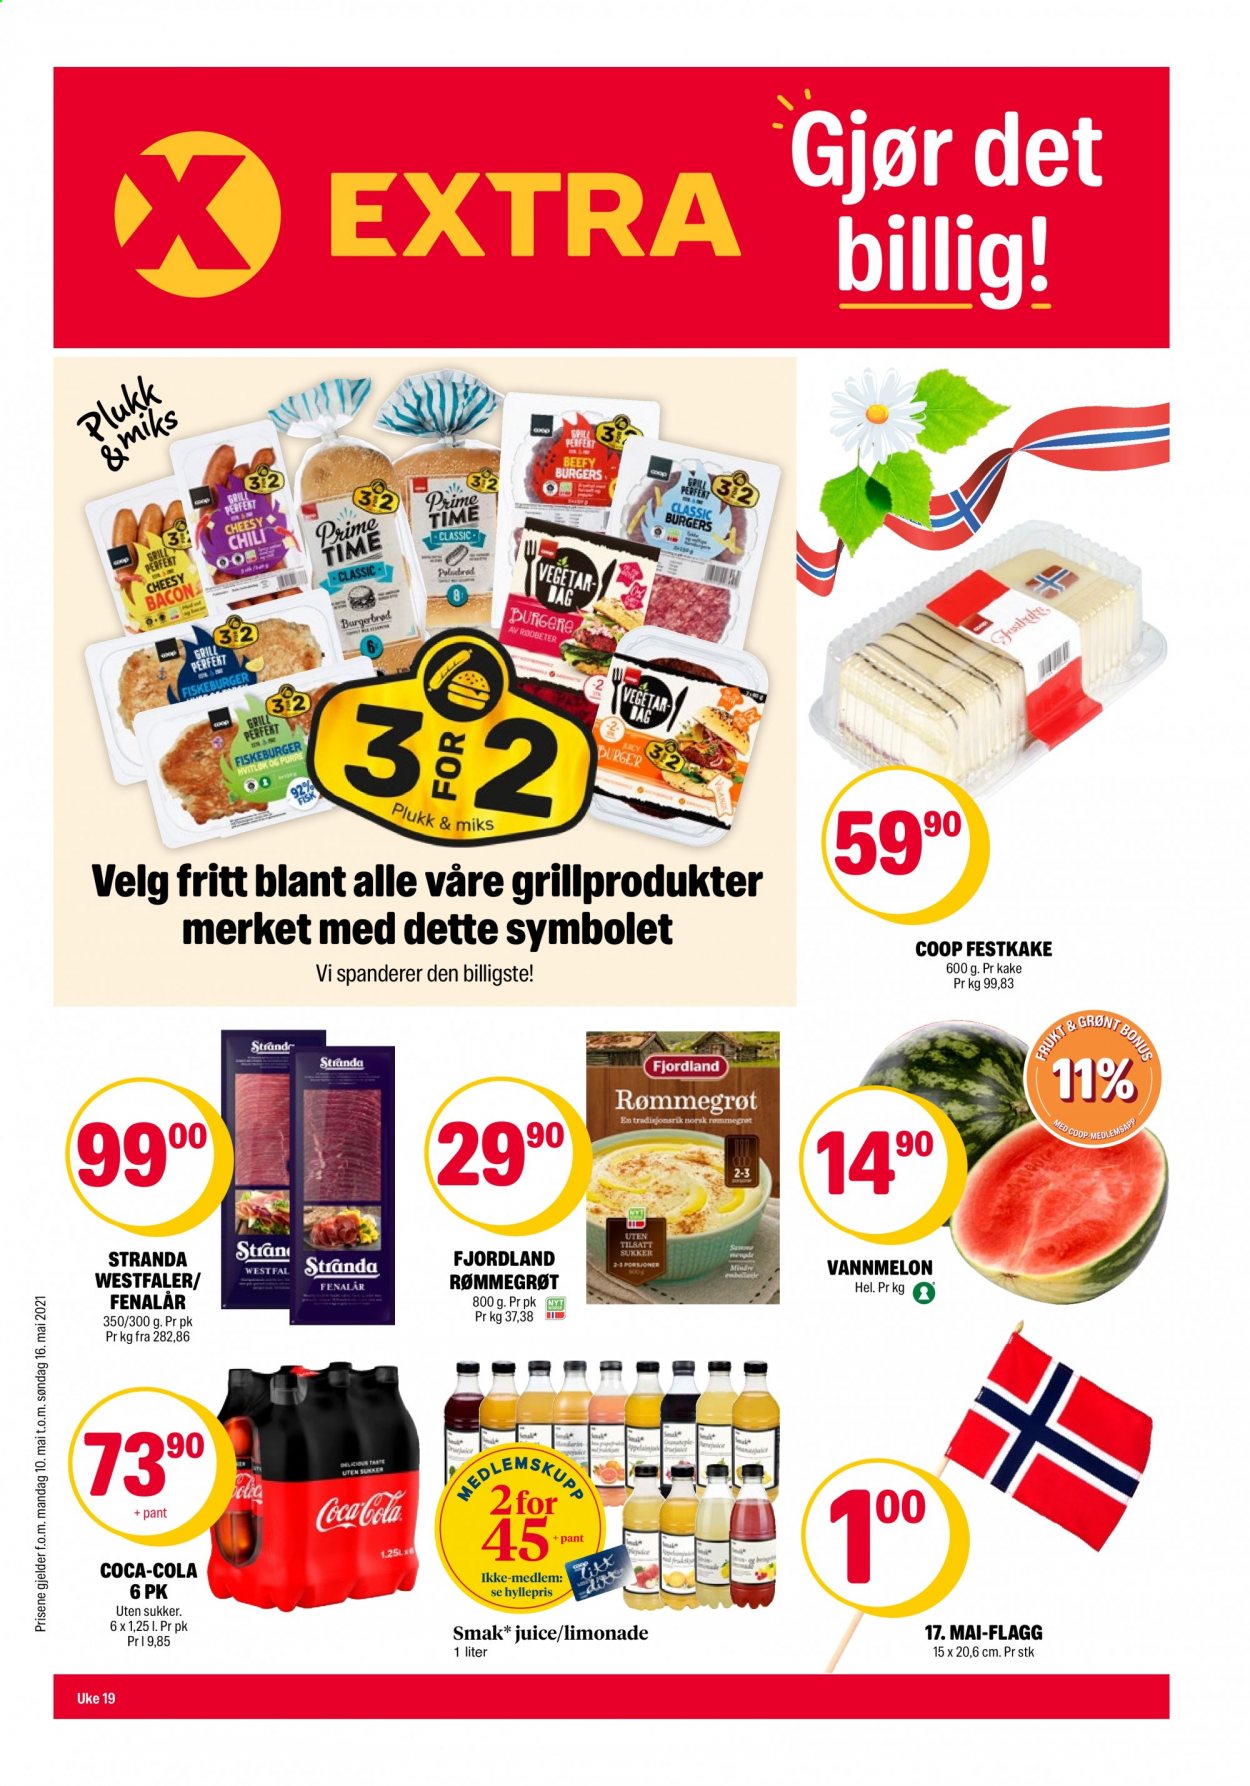 thumbnail - Kundeavis Coop Extra - 10.5.2021 - 16.5.2021 - Produkter fra tilbudsaviser - burger, hvitløk, fisk, bacon, fenalår, Fjordland, Coca-Cola. Side 1.